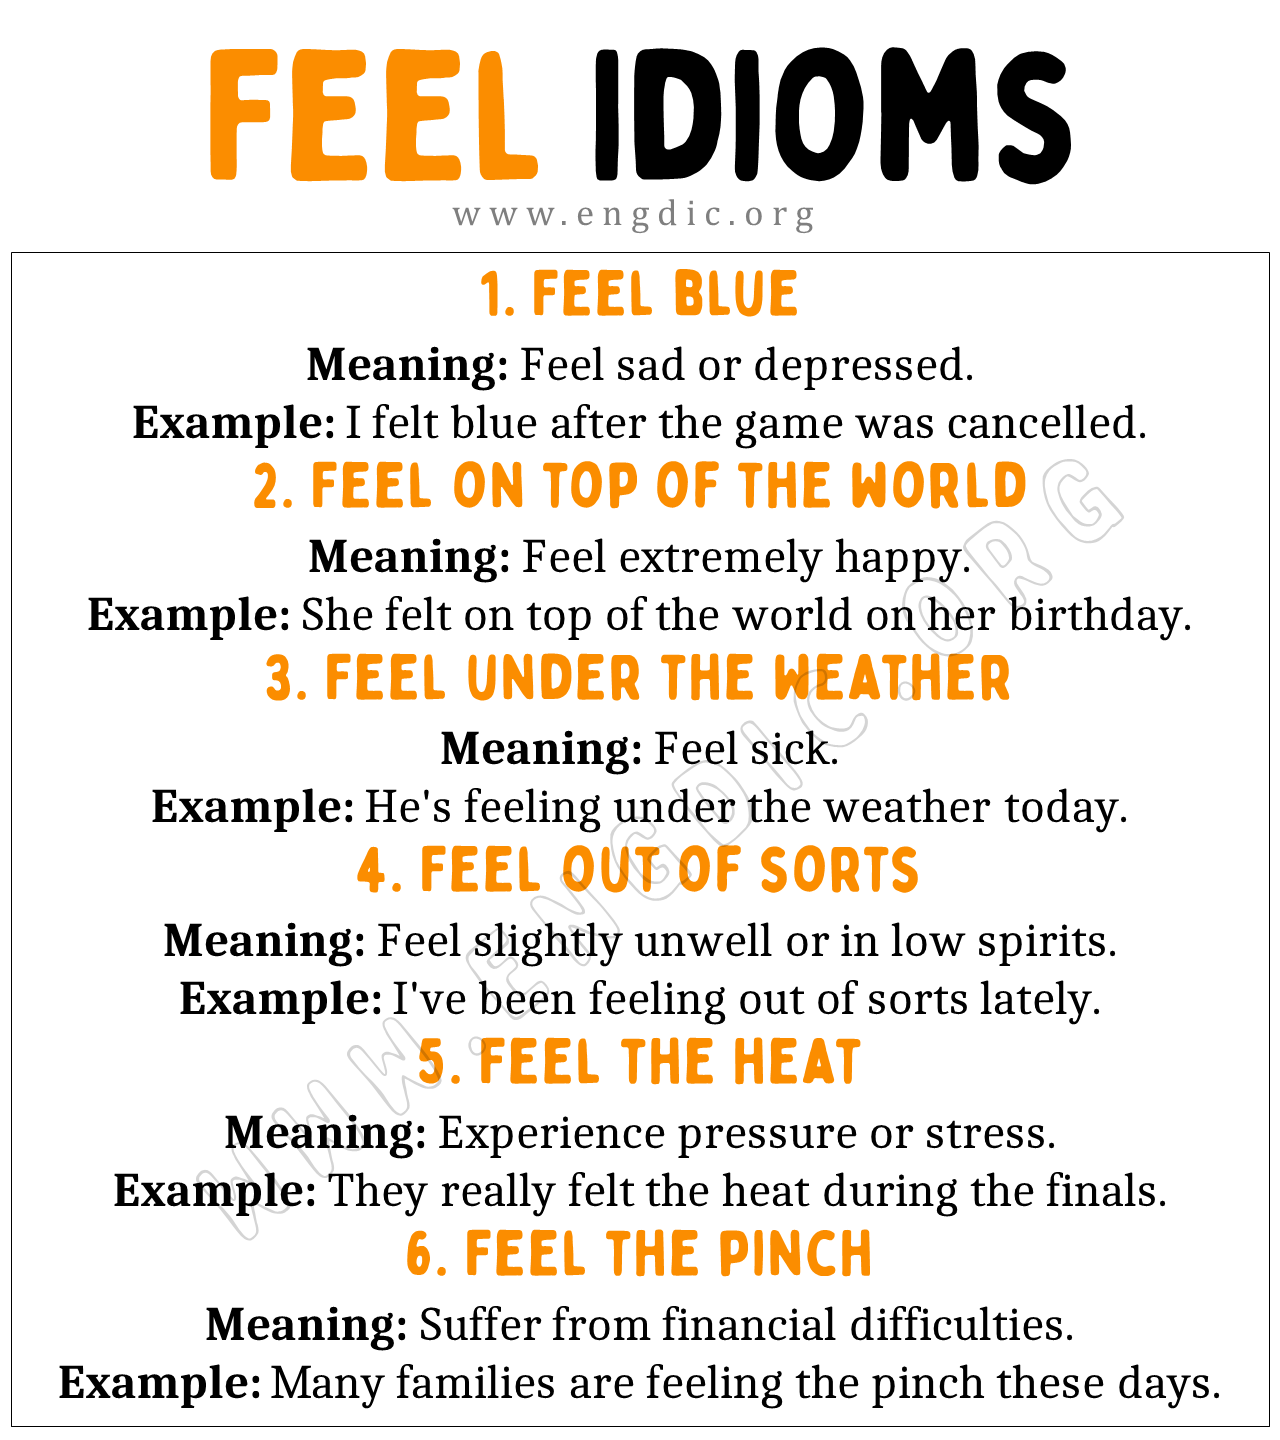 Feel Idioms